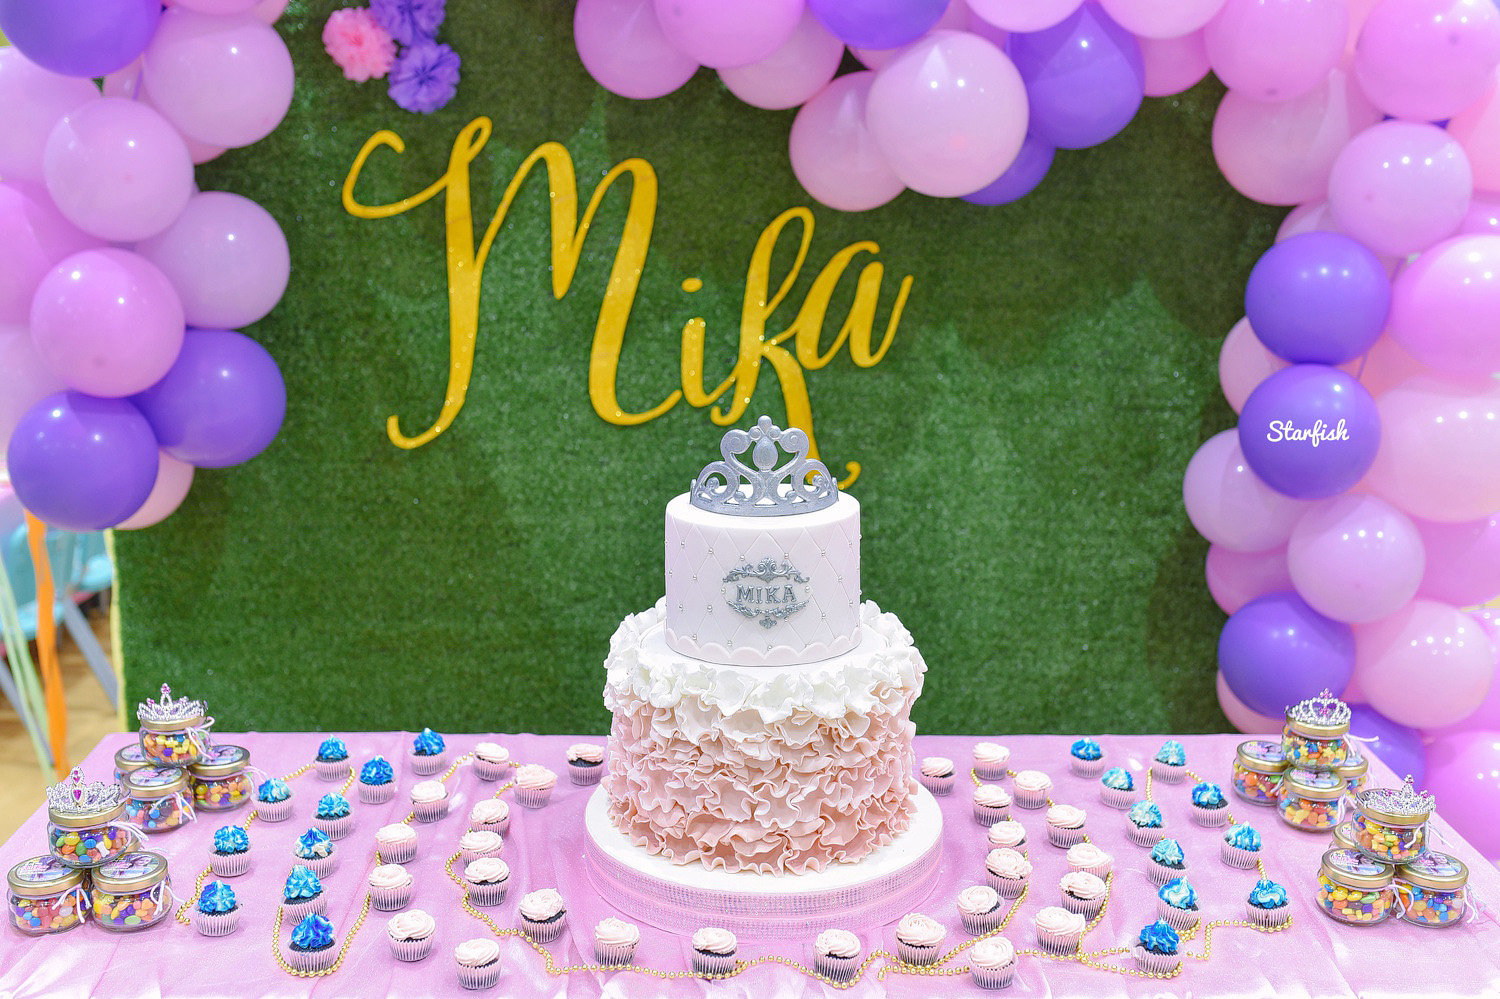 Mika's 7th birthday